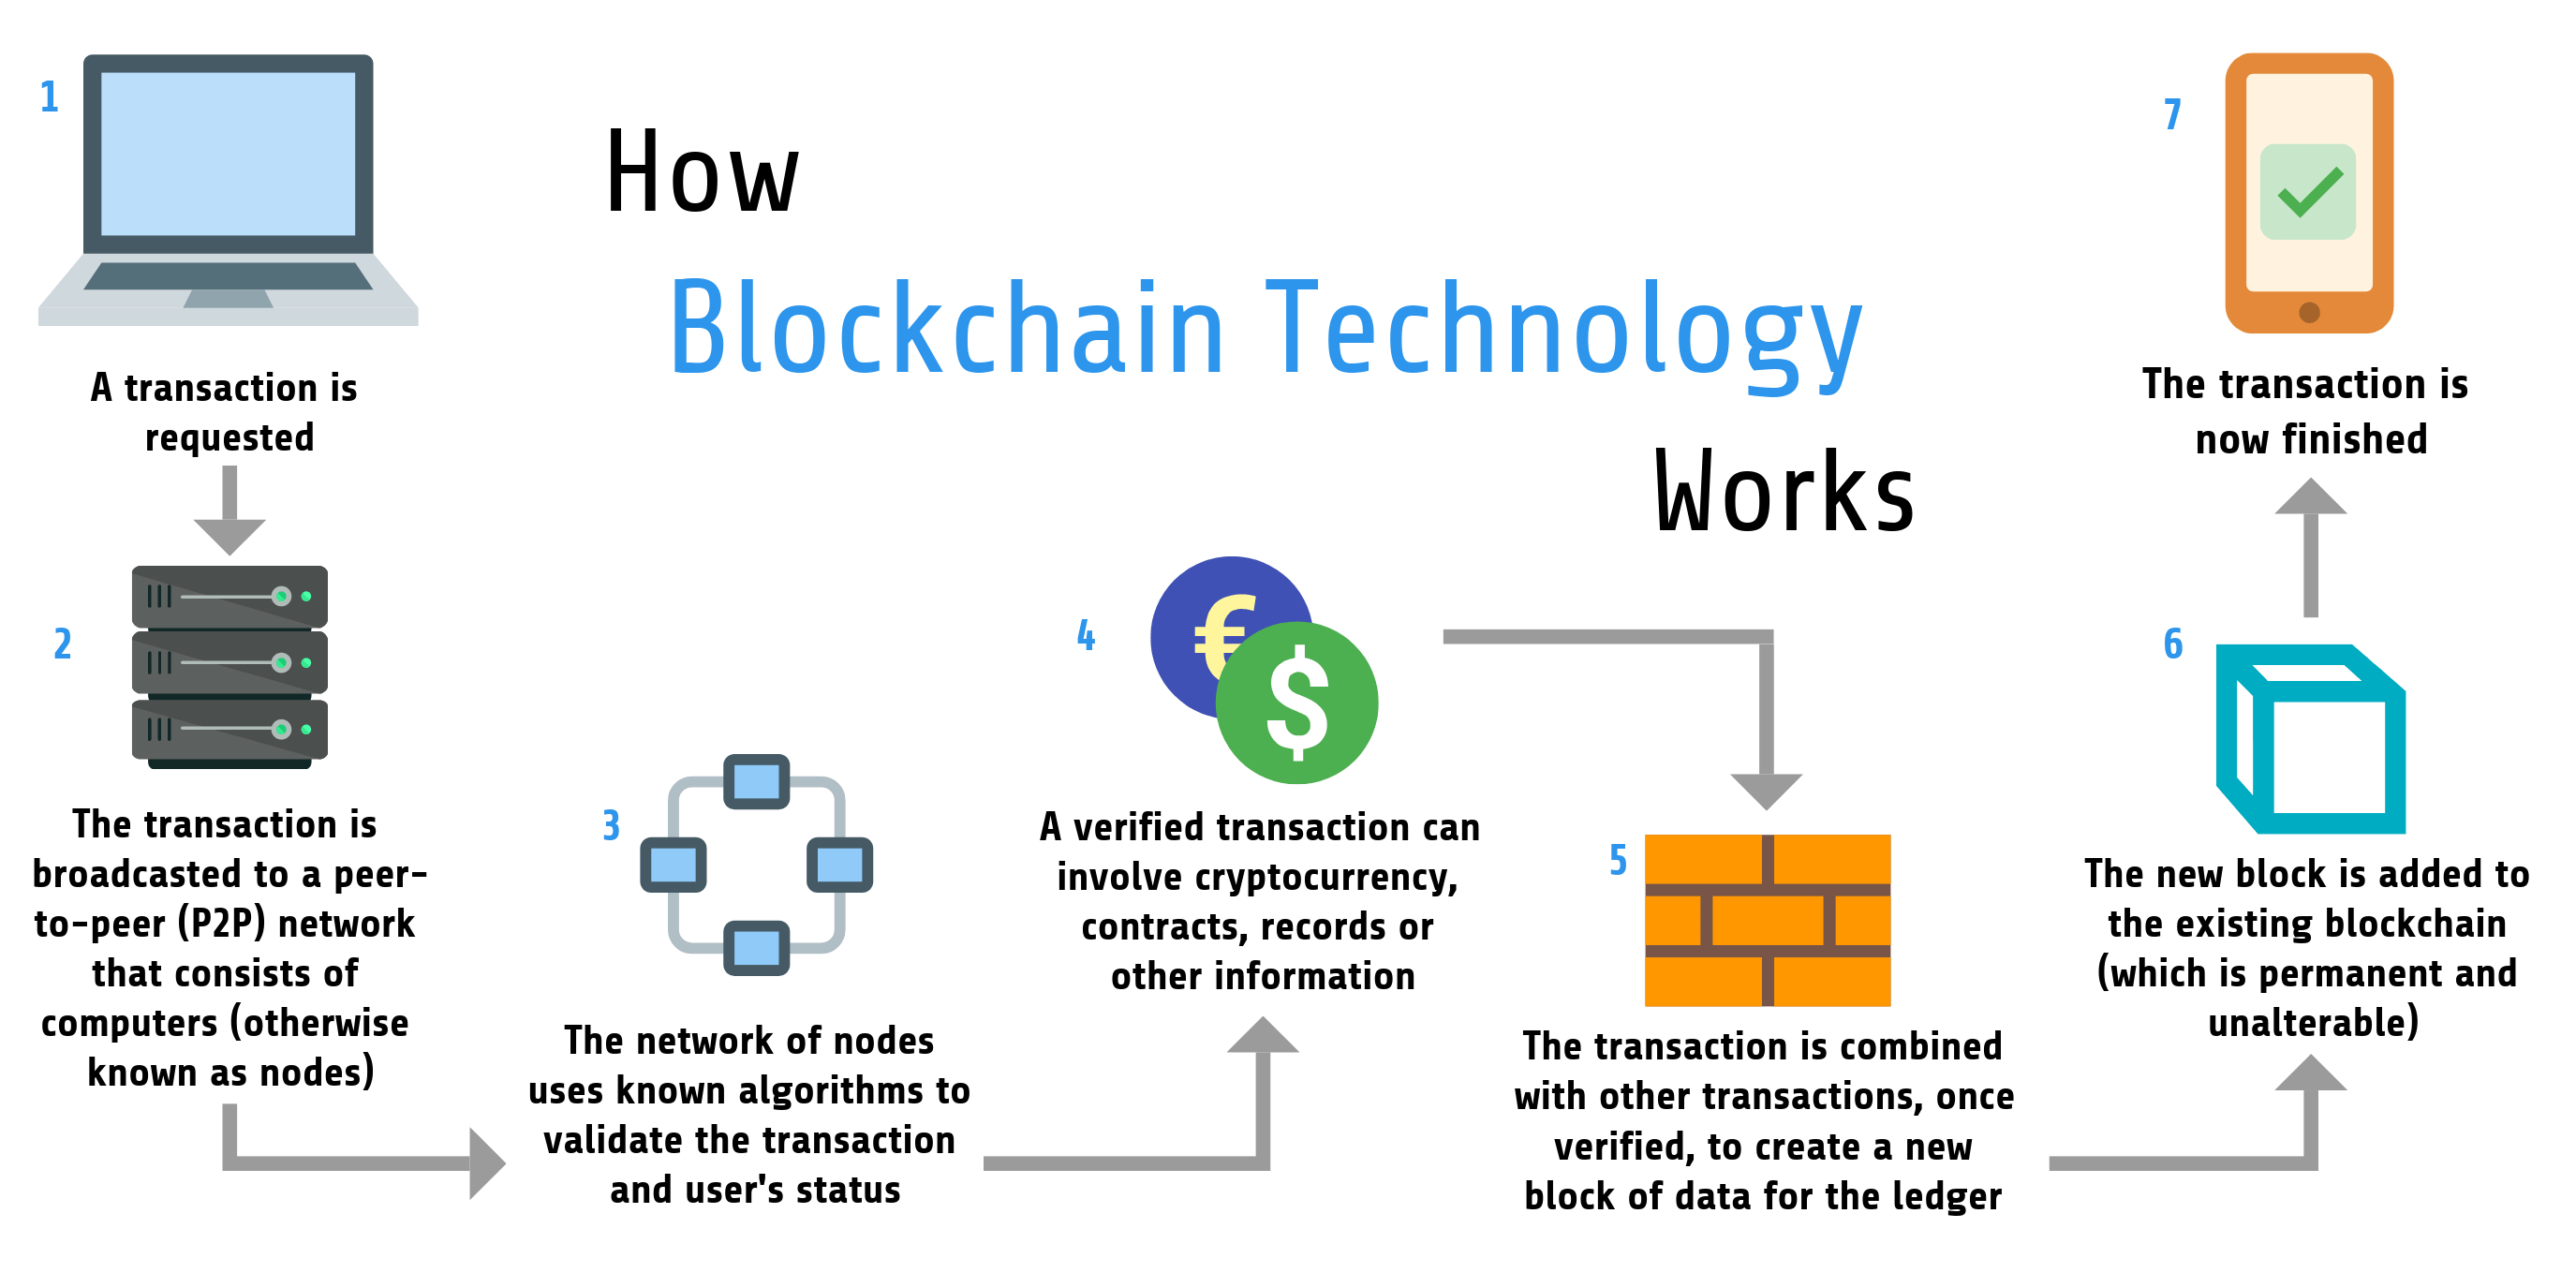 cryptocurrencies that use blockchain